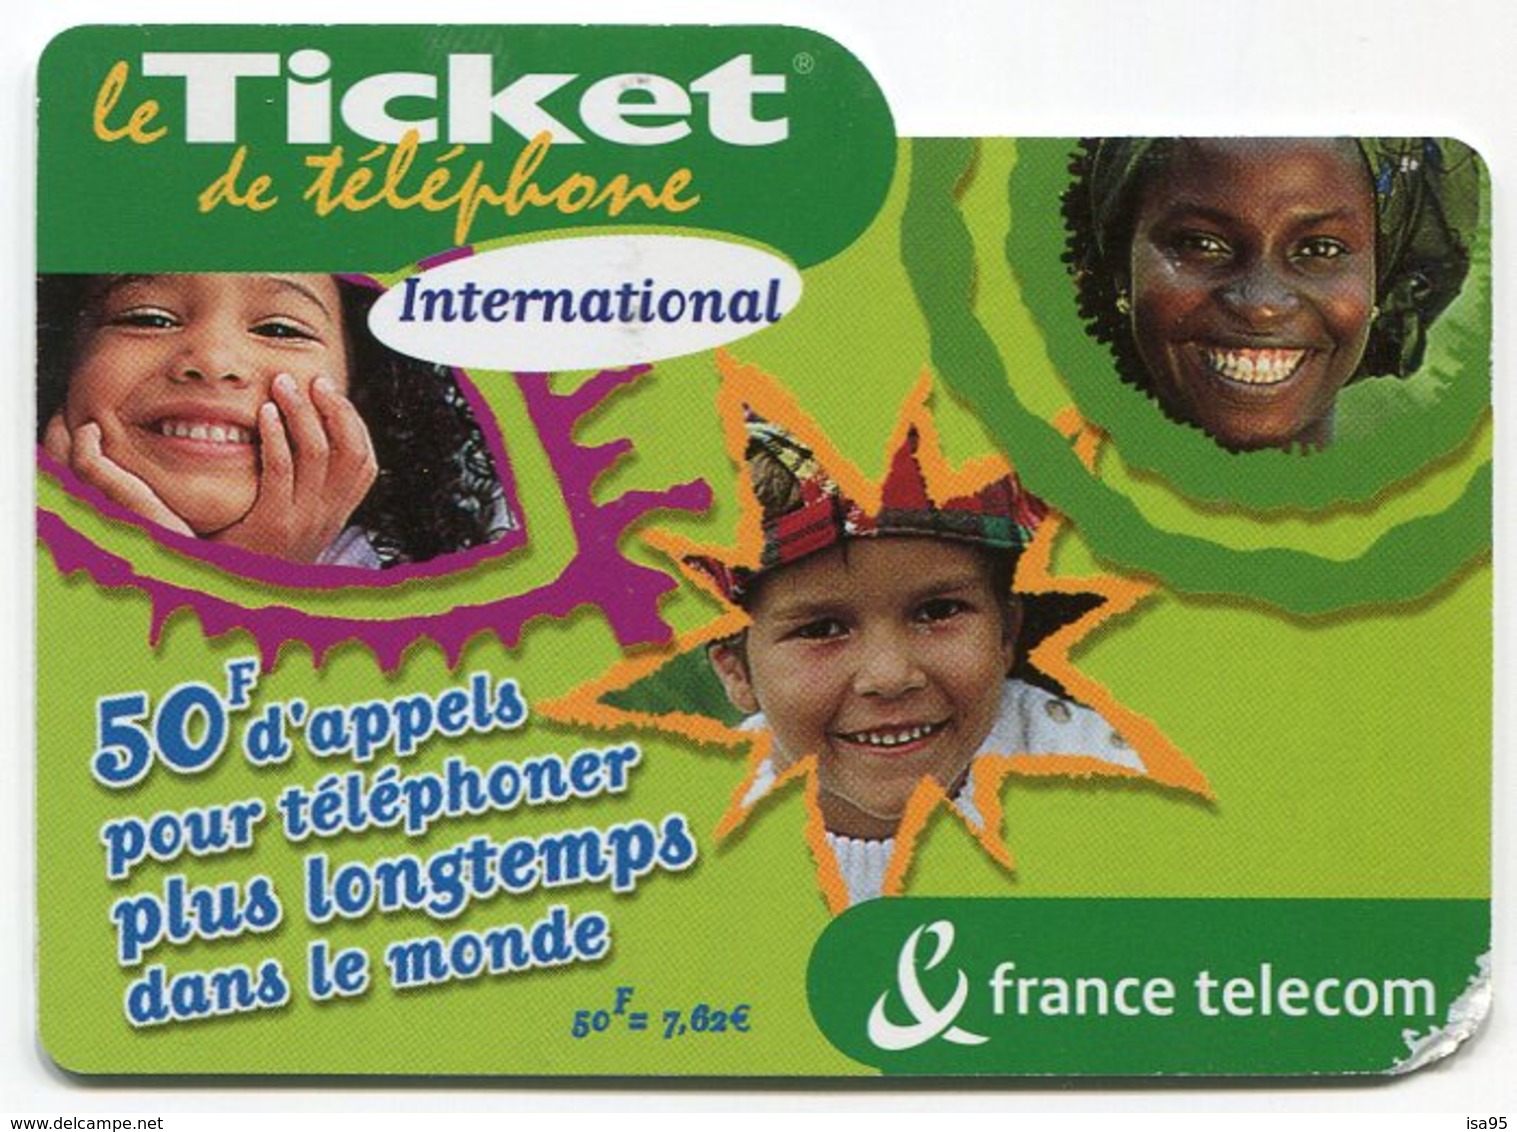 TELECARTE-LE TICKET DE TELEPHONE INTERNATIONAL-2003-50F - Billetes FT